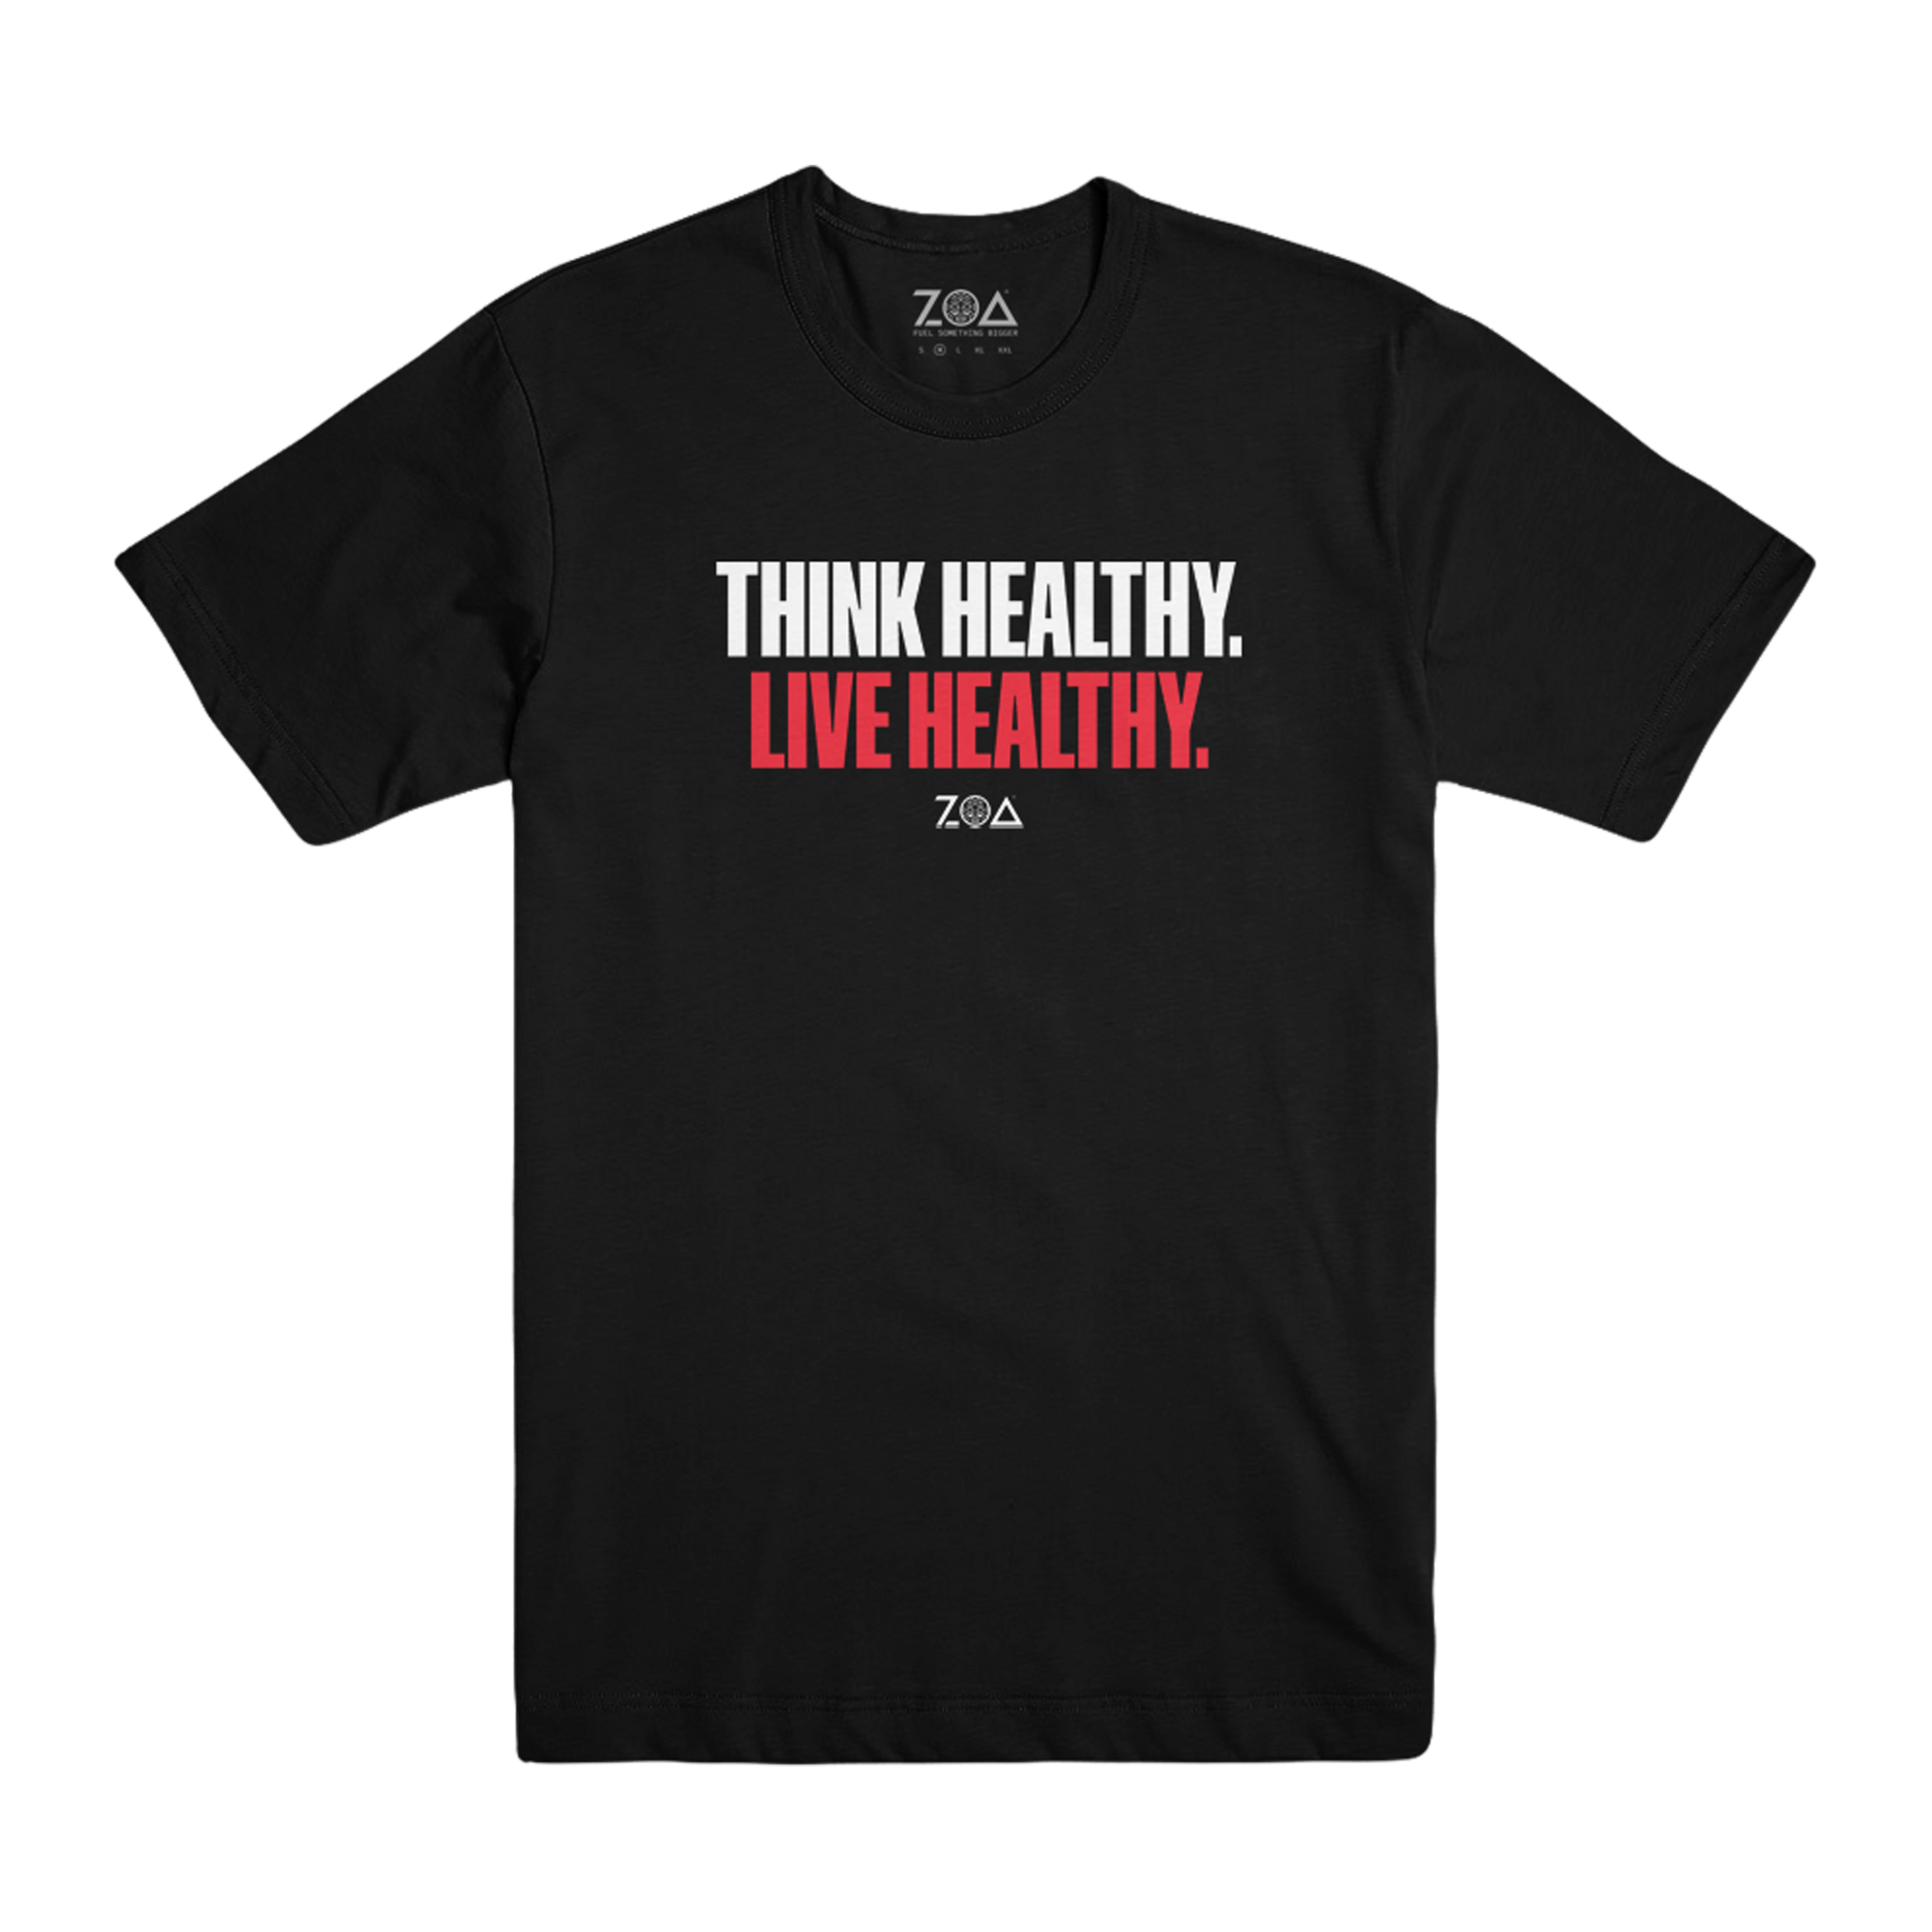 ZOA "Live Healthy" Unisex T-Shirt